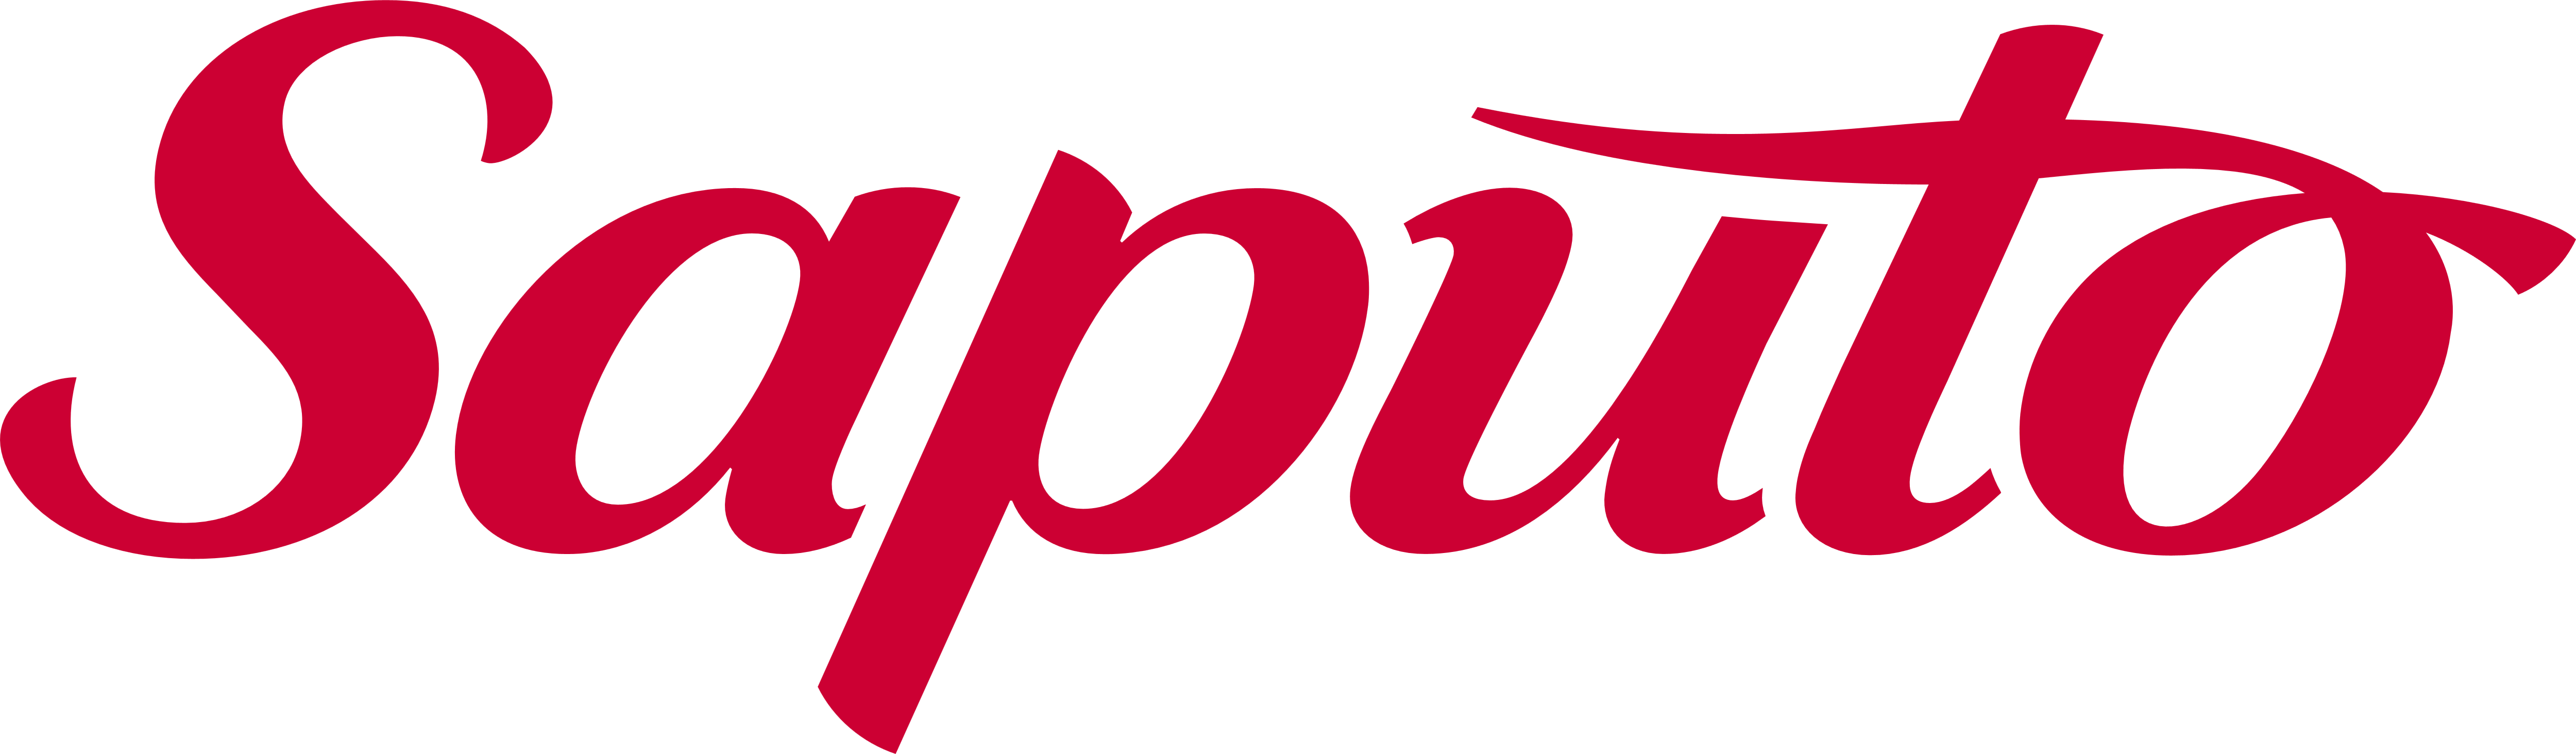 Saputo Logo